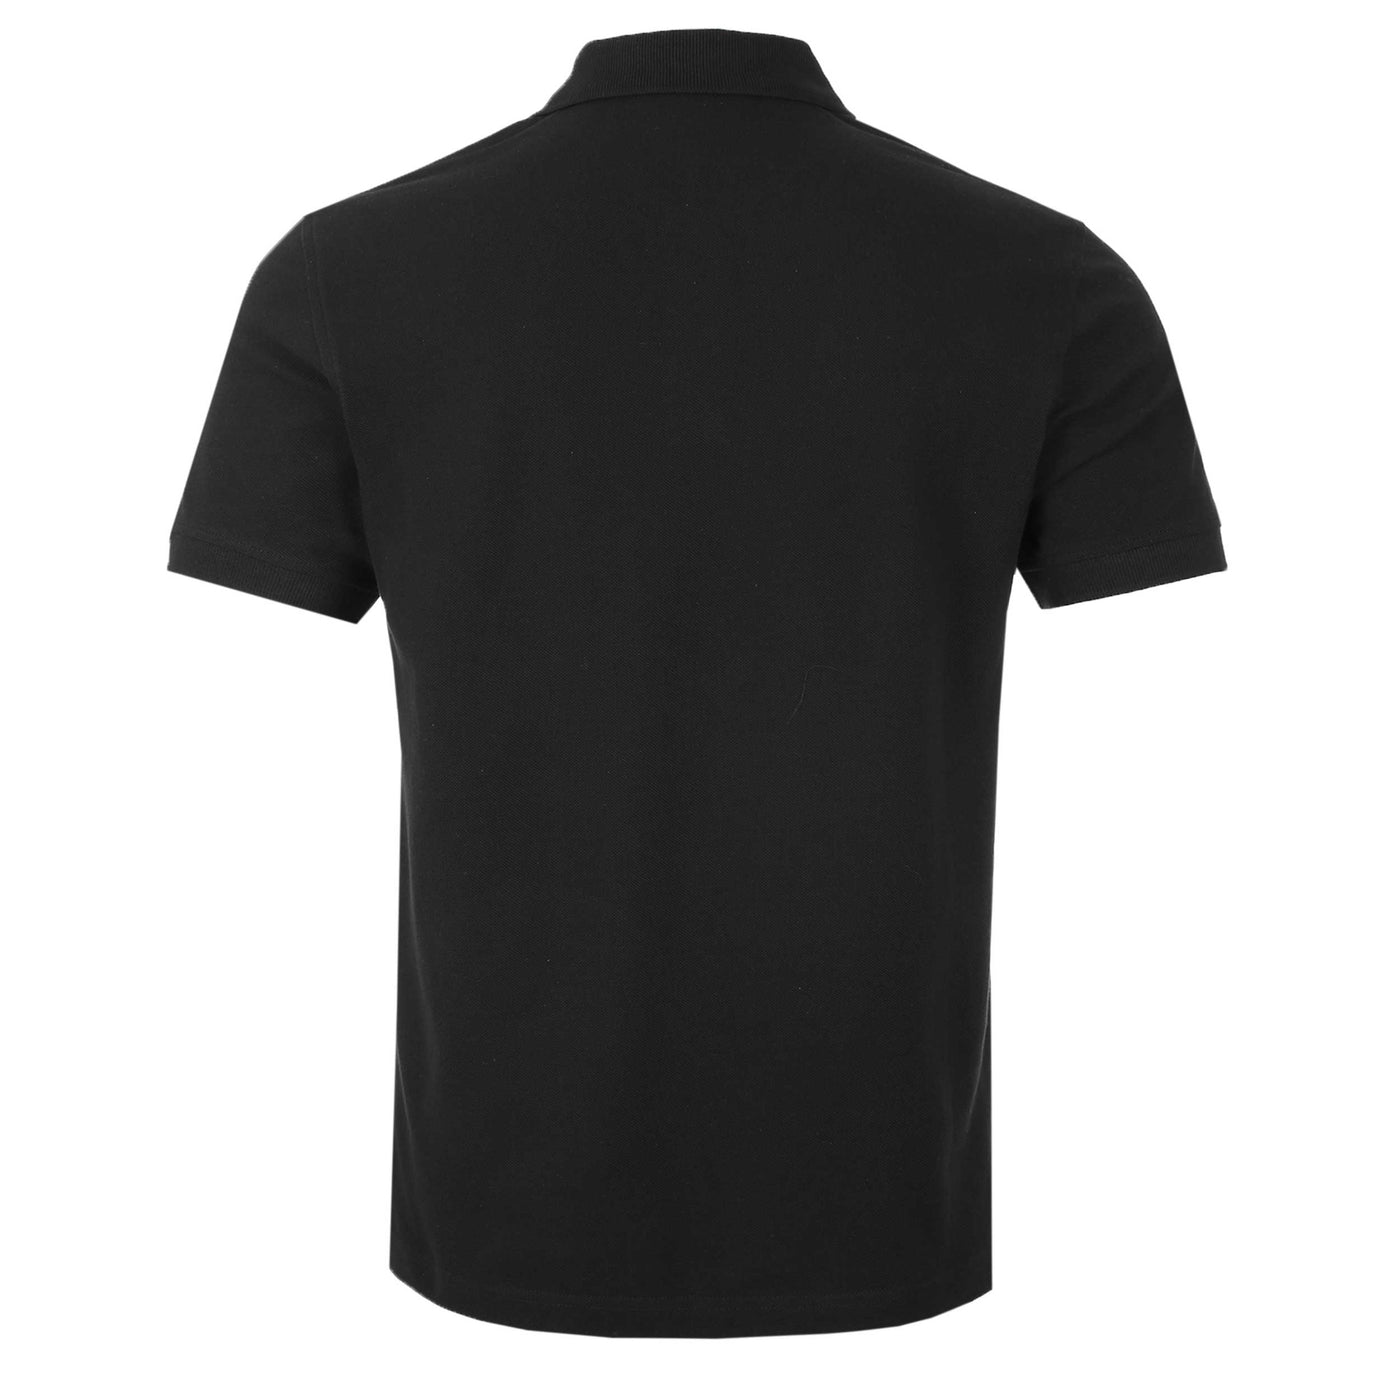 Belstaff Classic Short Sleeve Polo Shirt in Black Back